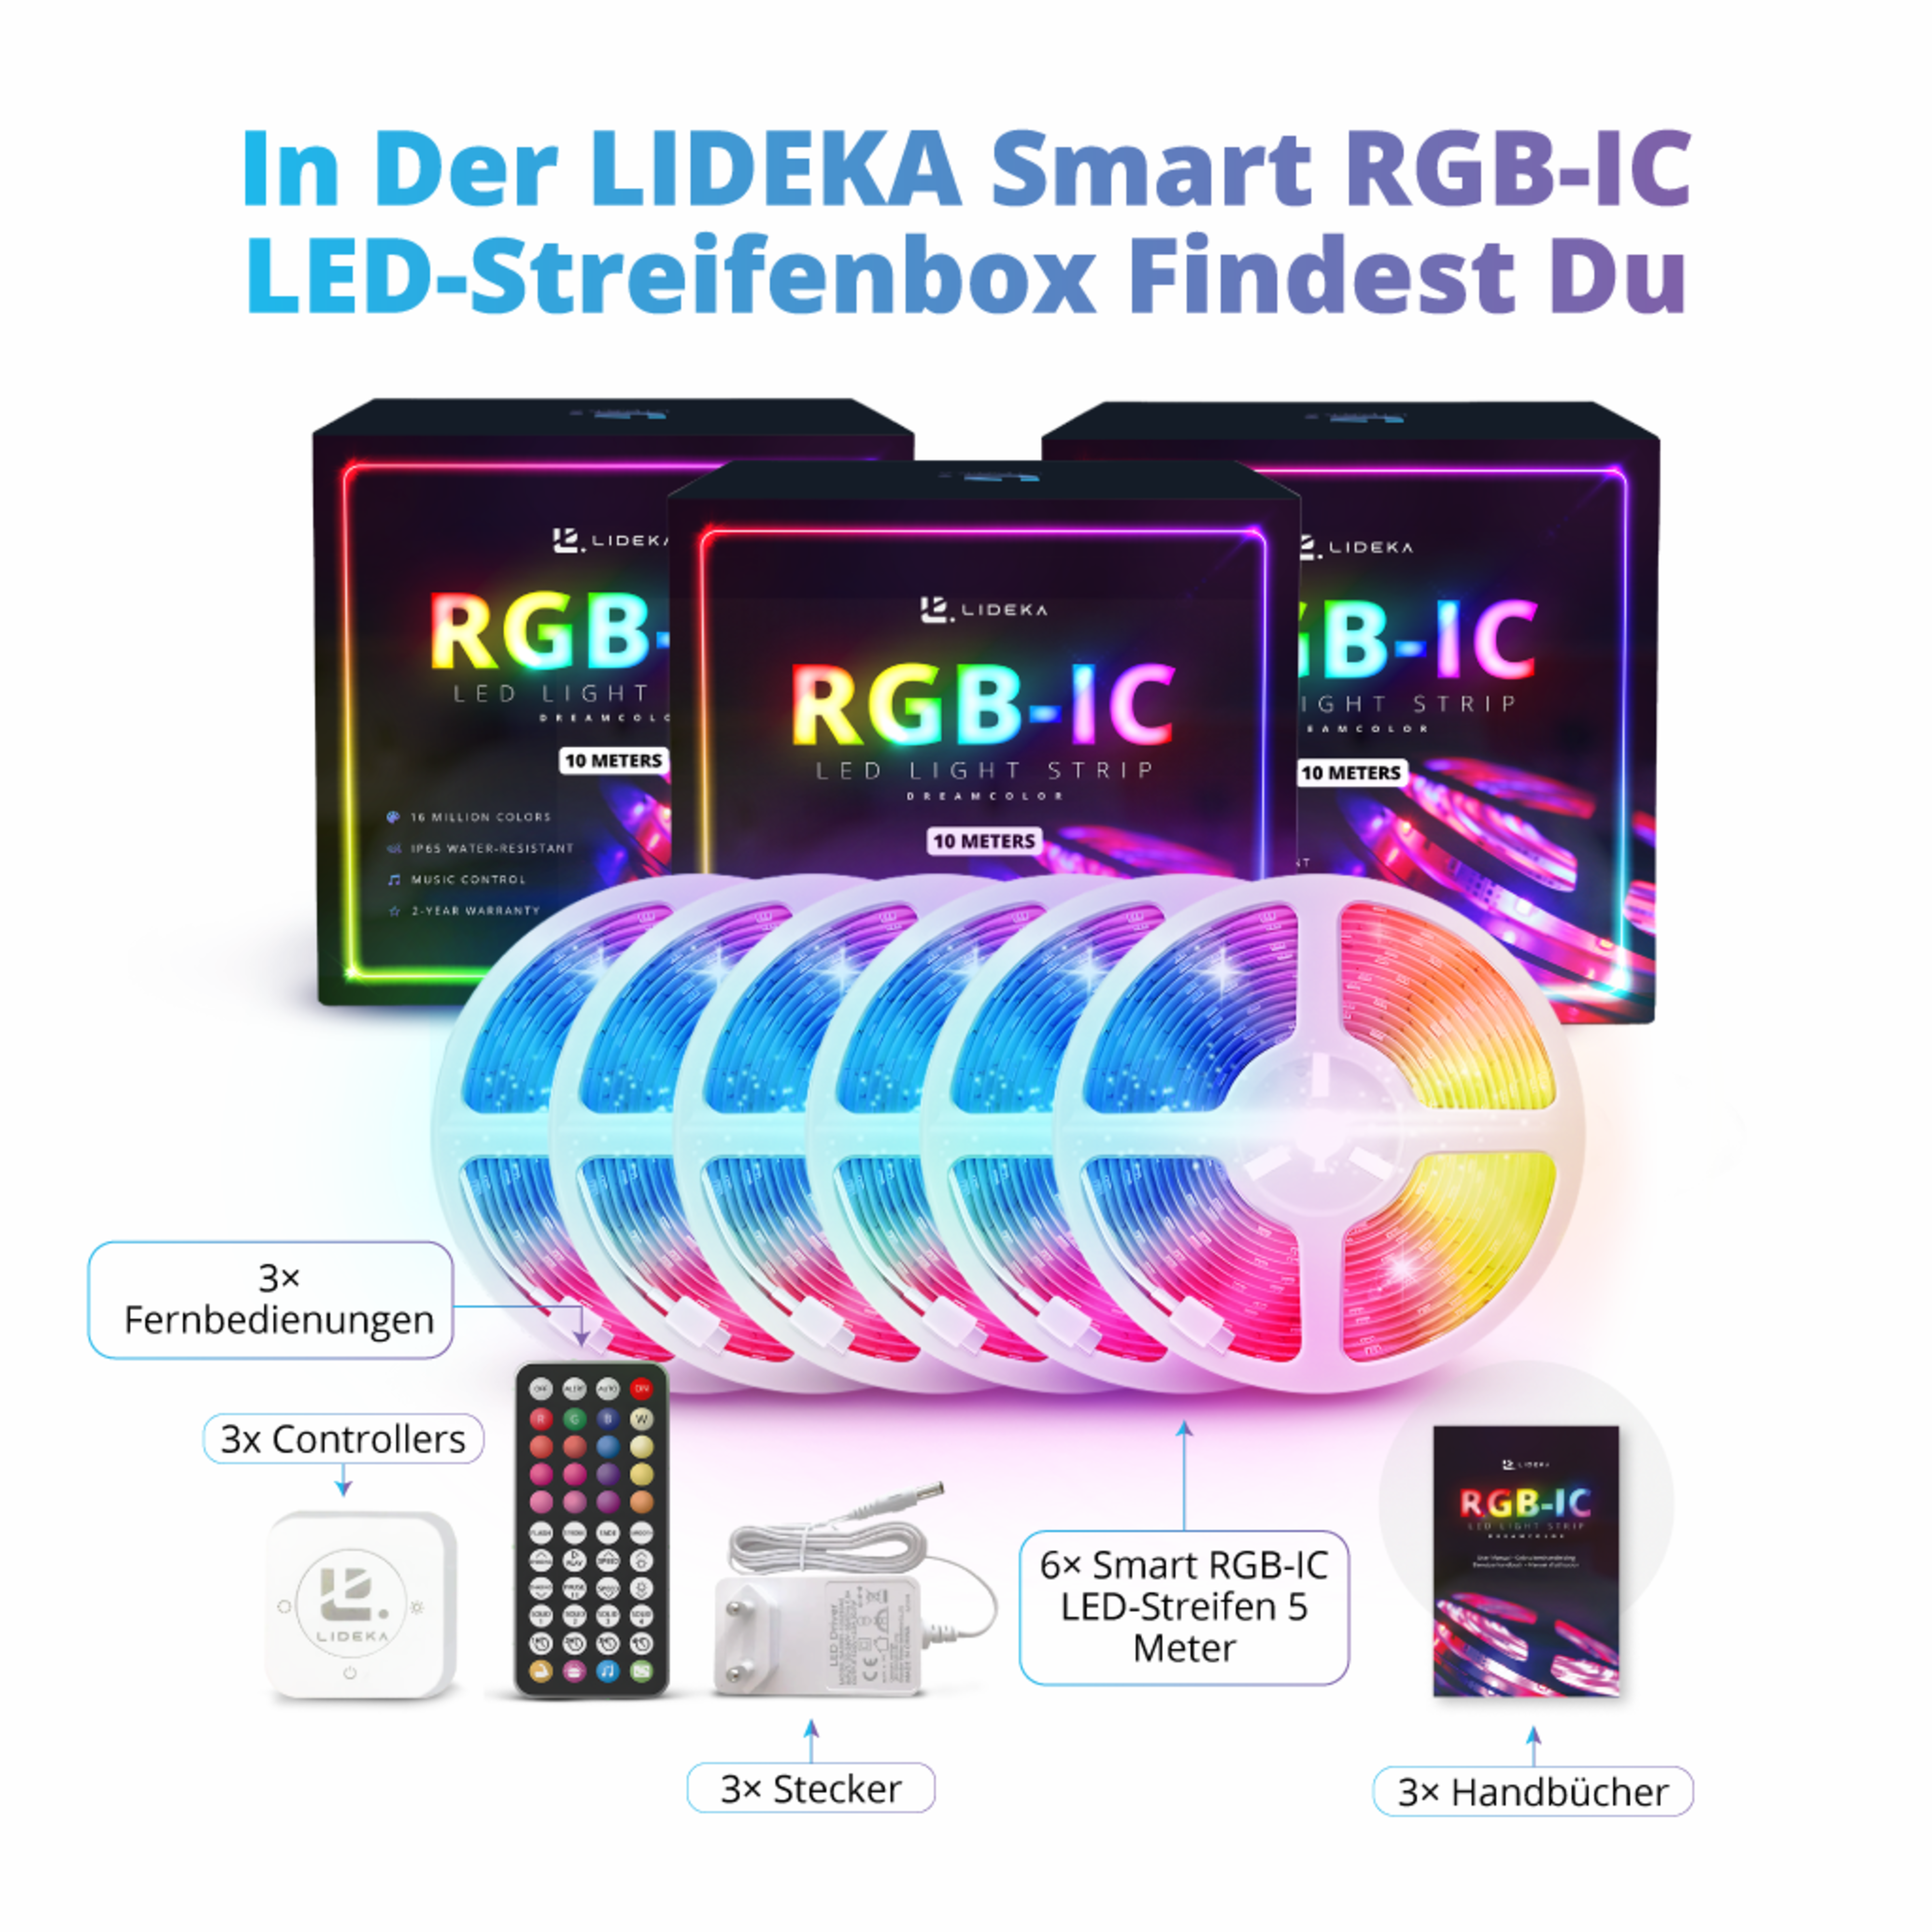 LED-Streifen 30m LED Regenbogen LIDEKA strips RGBIC Multicolors